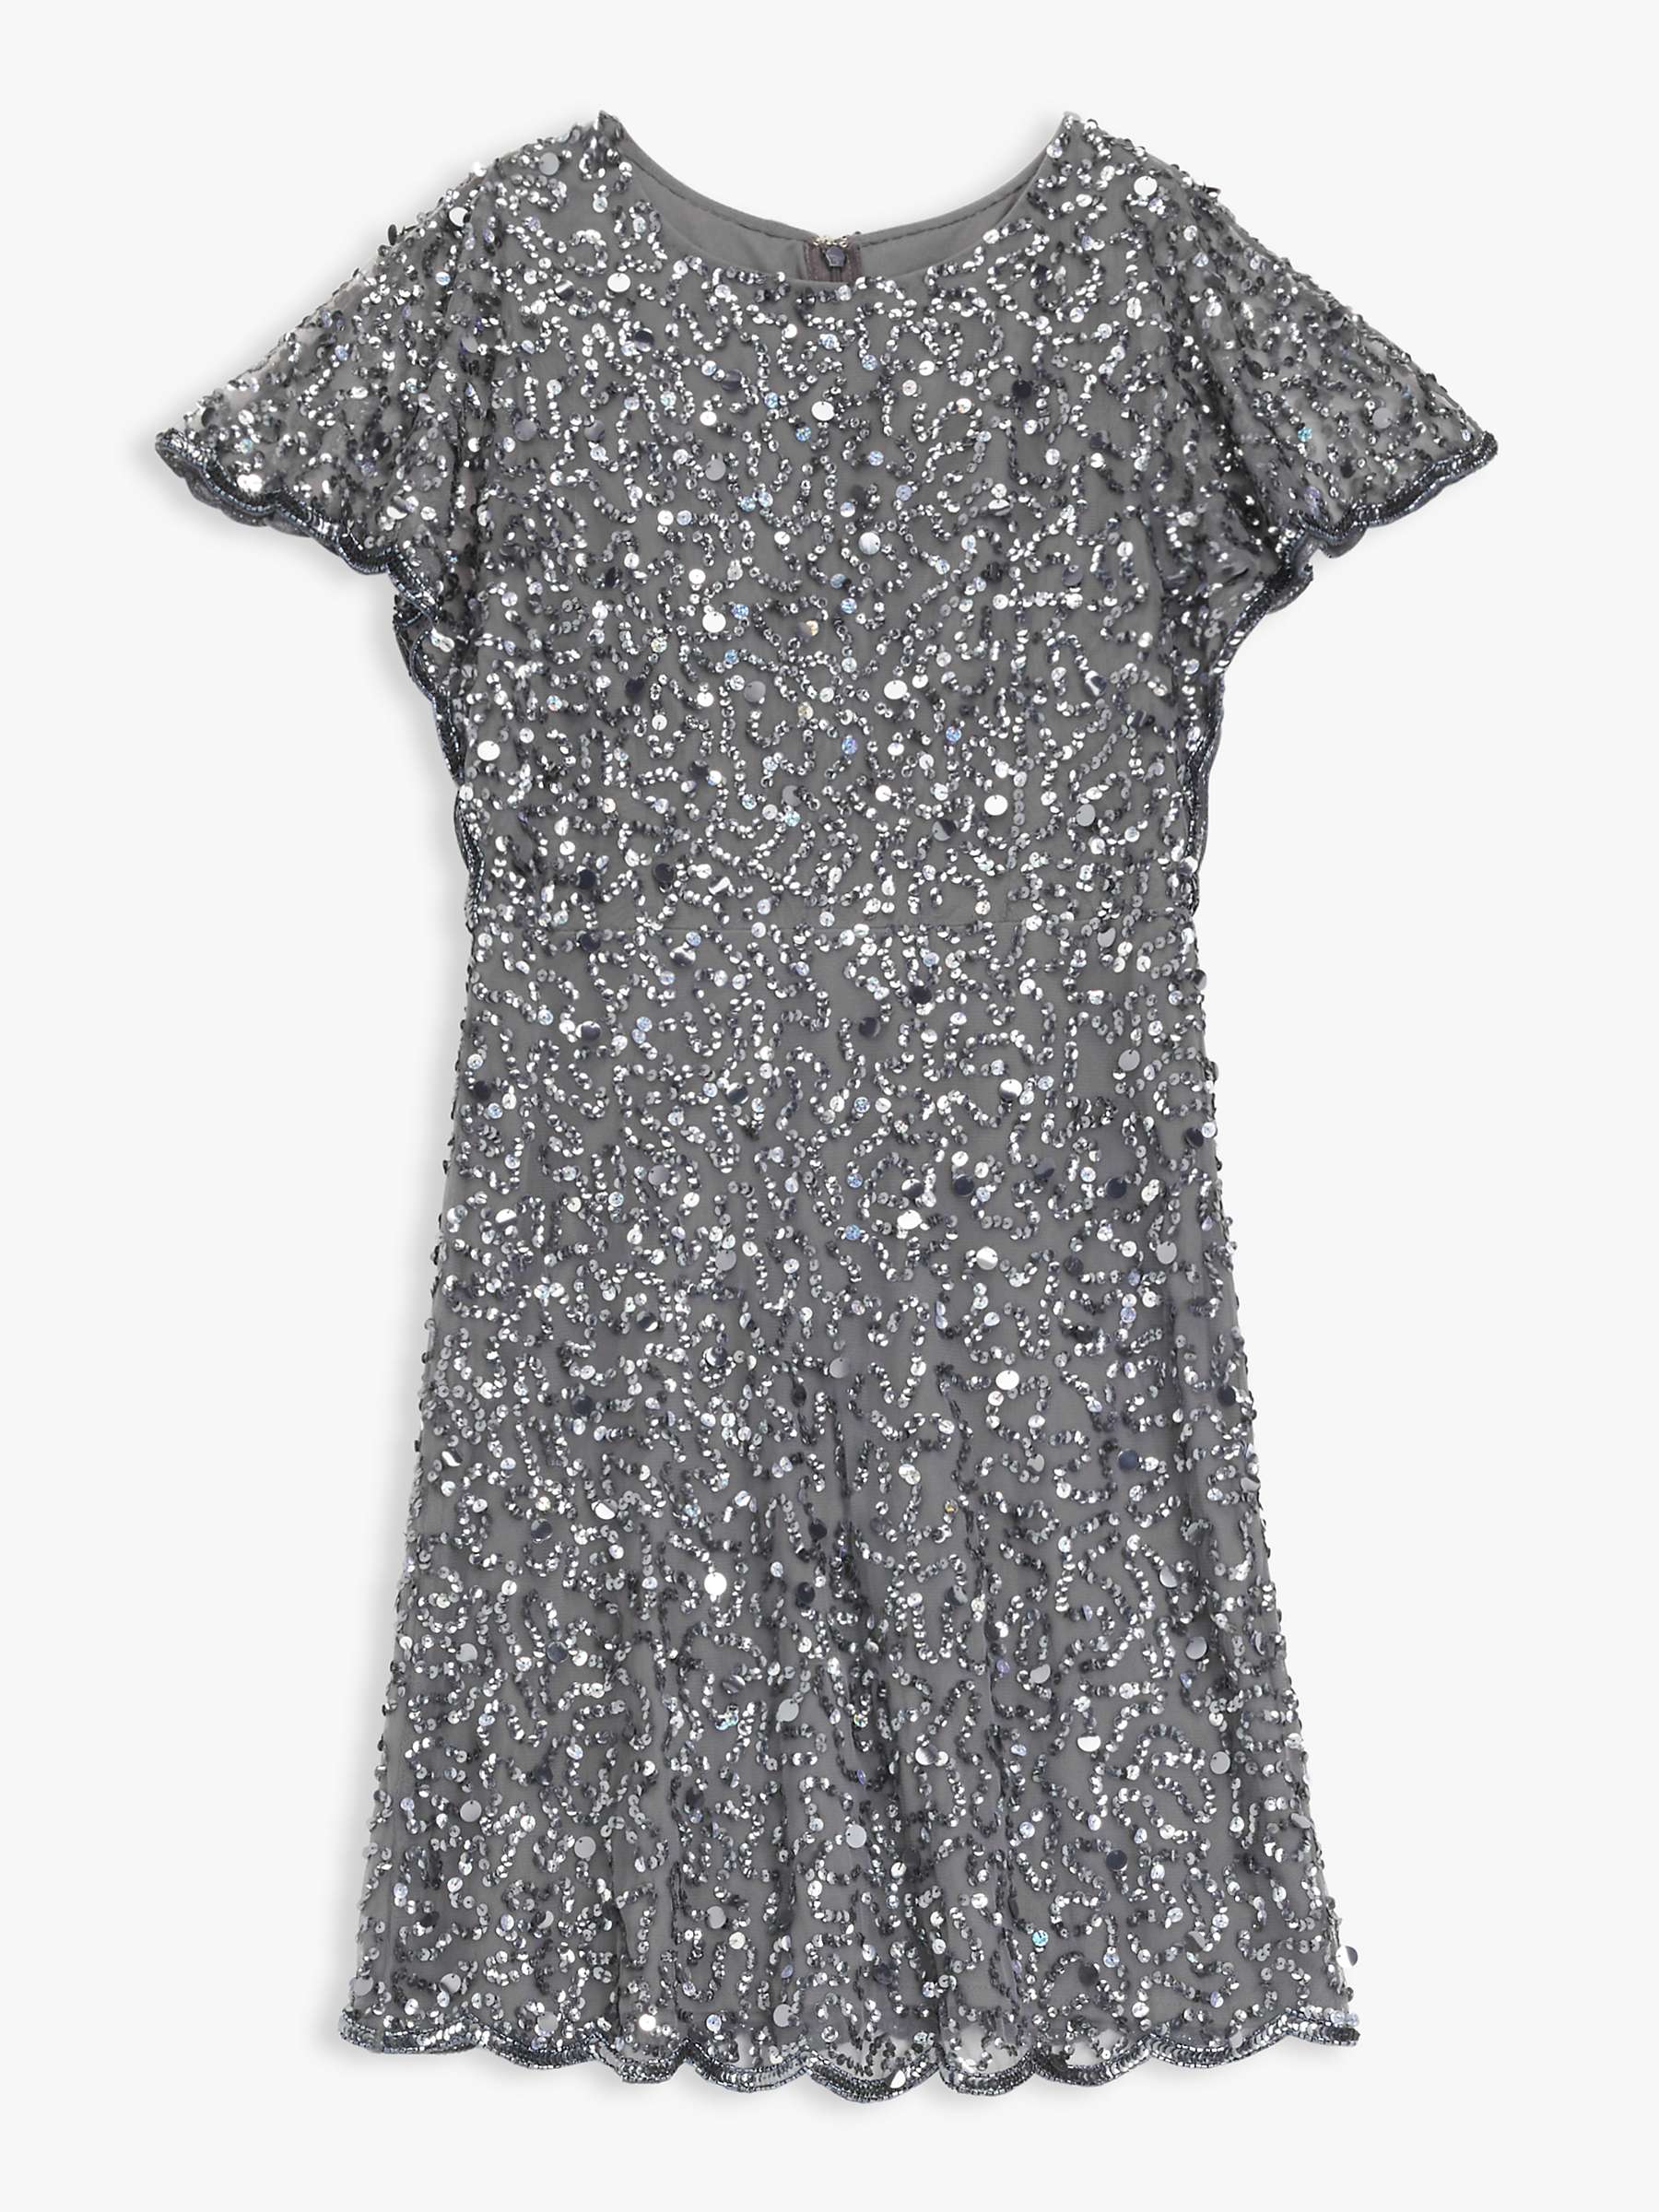 Buy Lace & Beads Rafaella Embellished Mini Dress Online at johnlewis.com